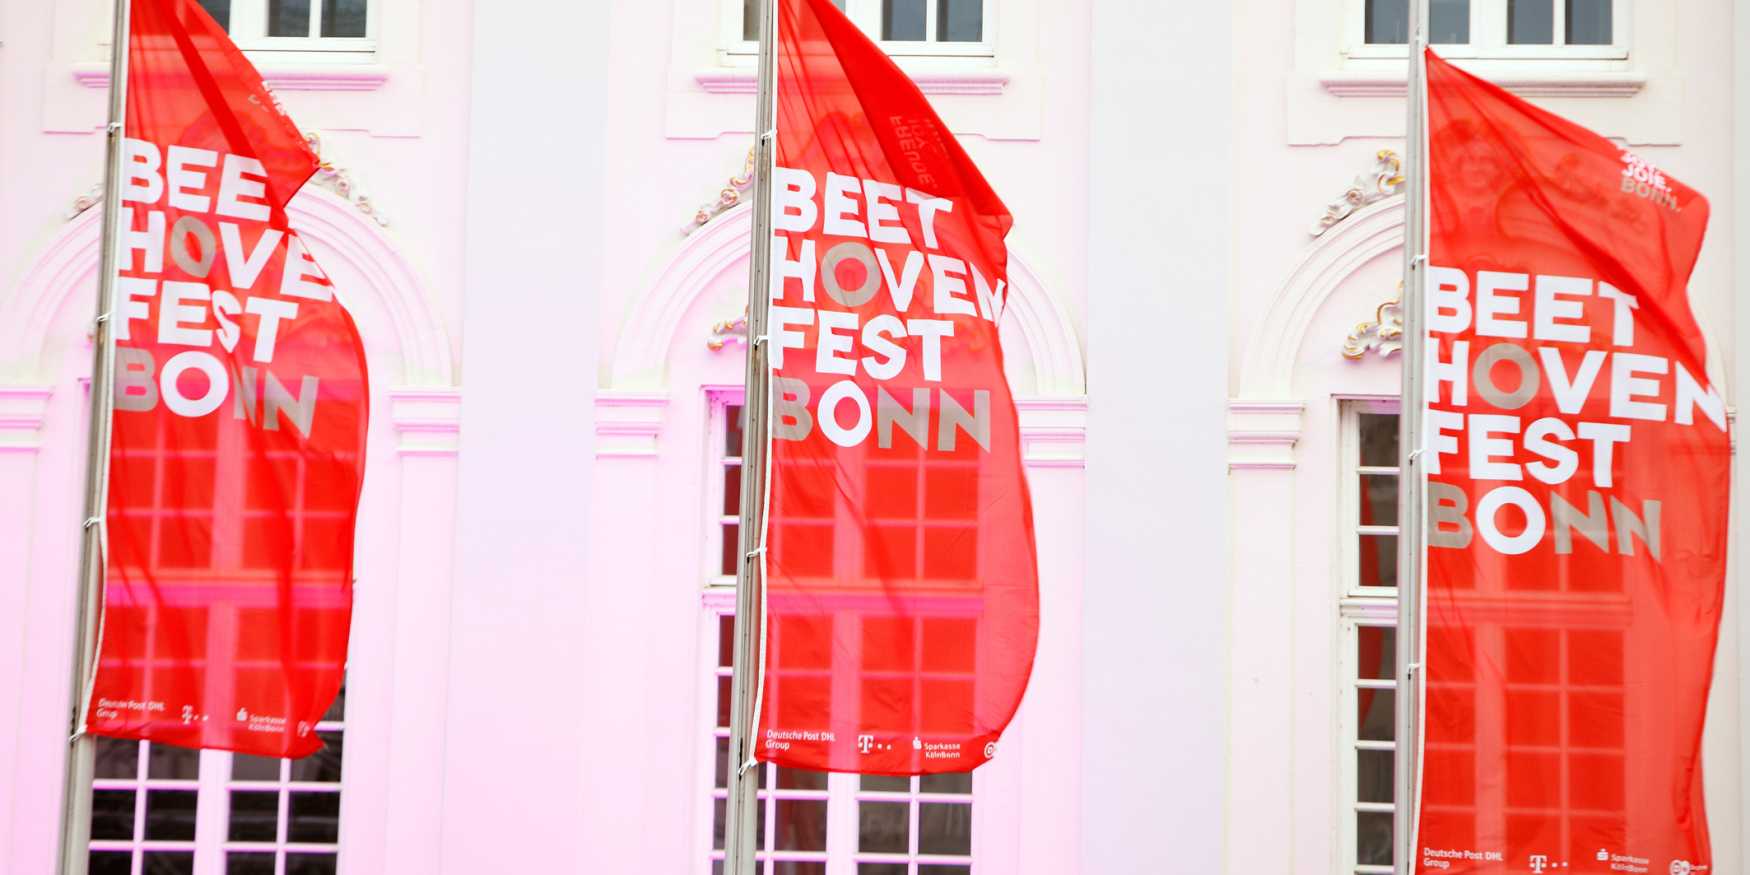 Beethovenfest Bonn 2018